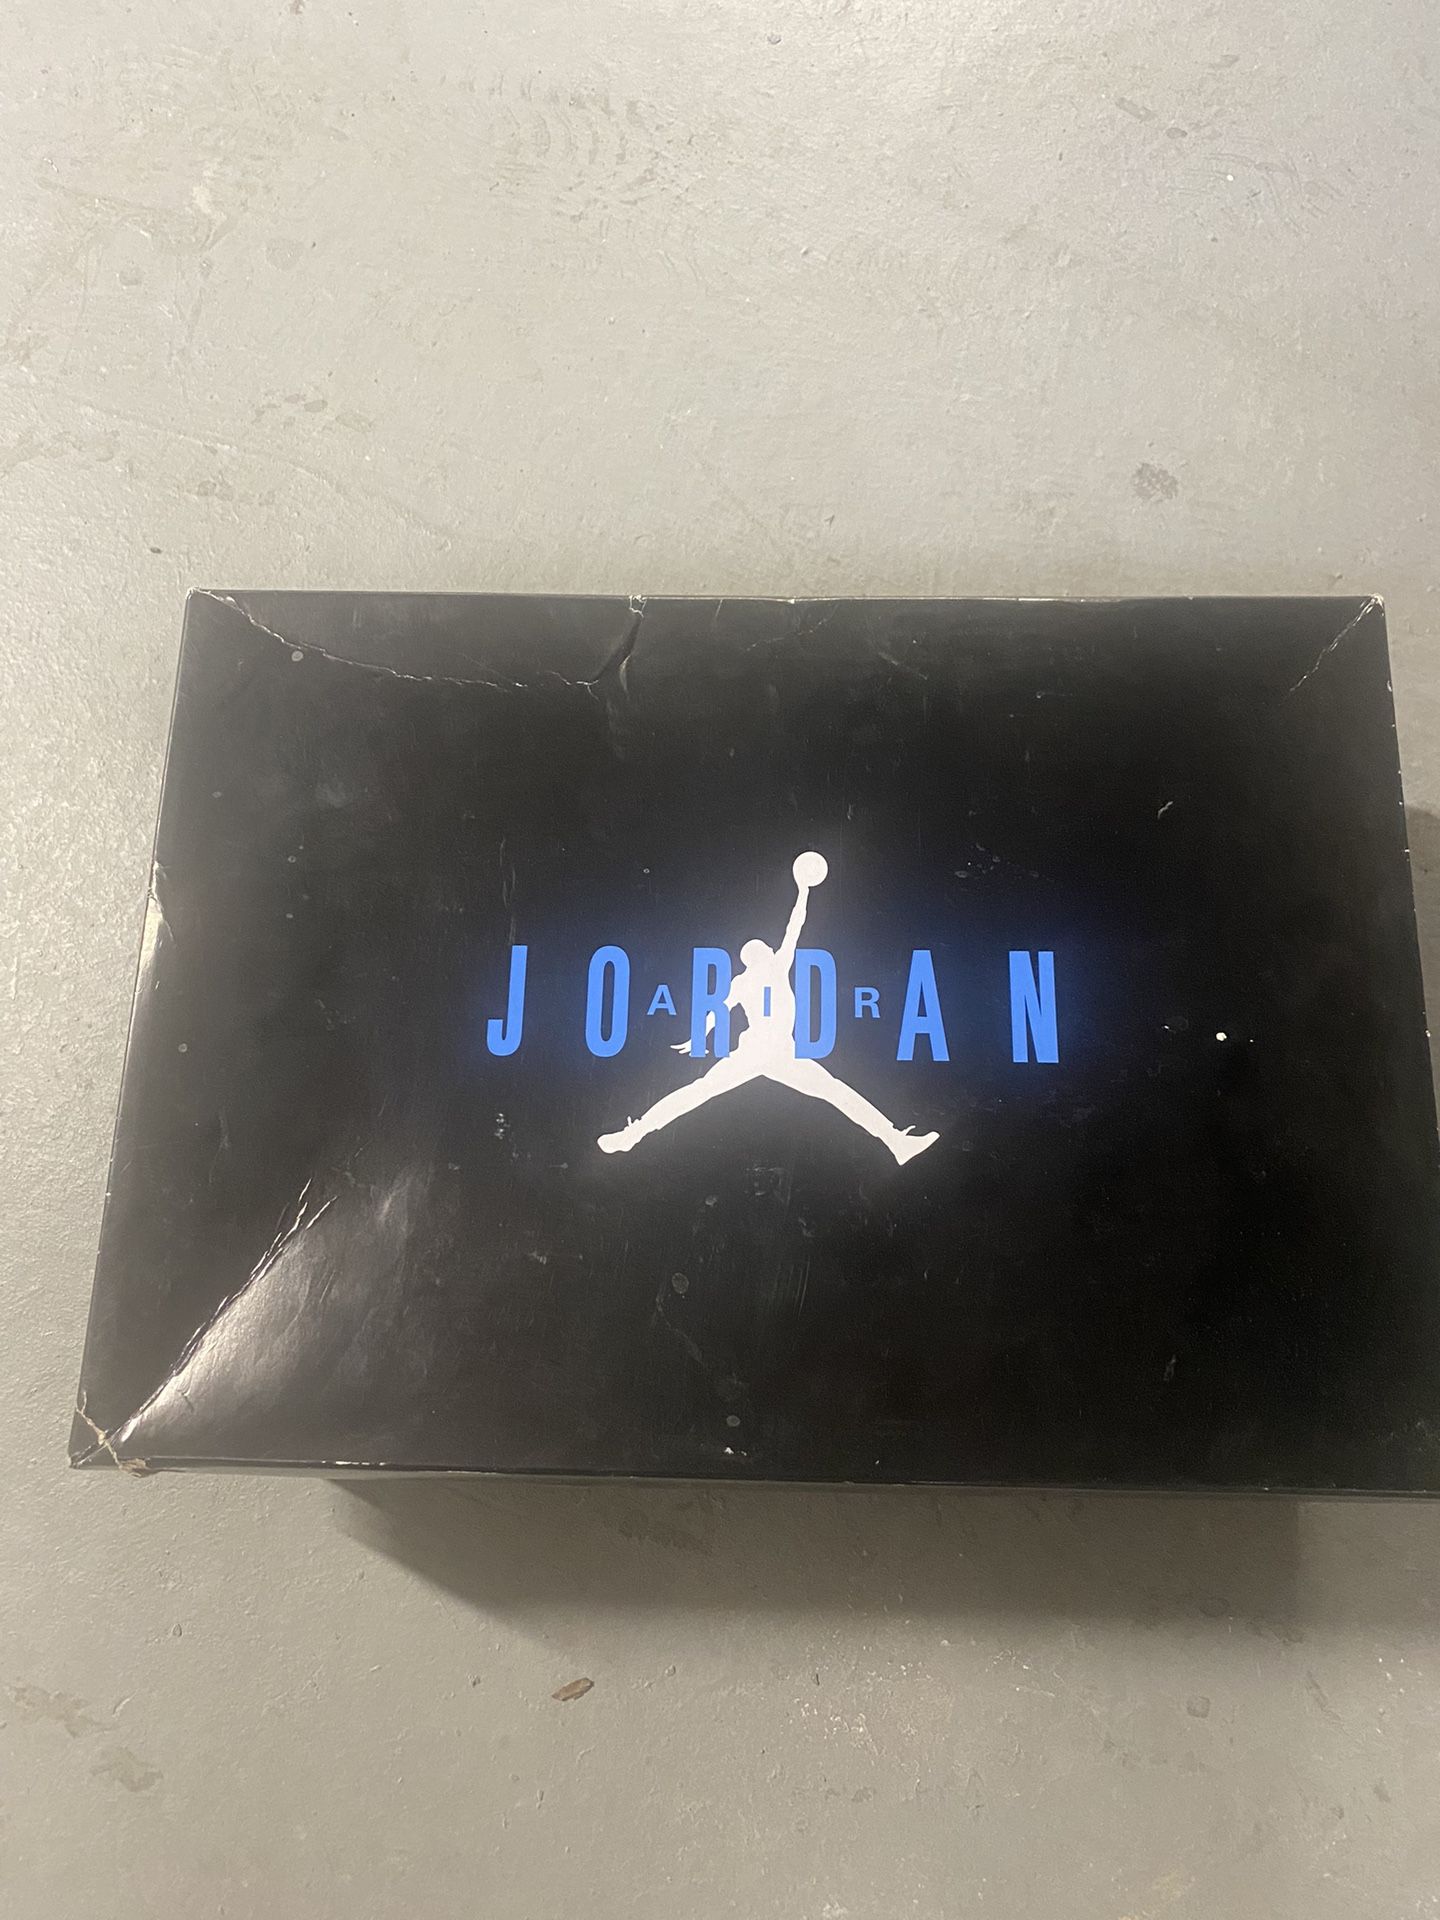 Jordan Retro 11 New (size 8 1/2)